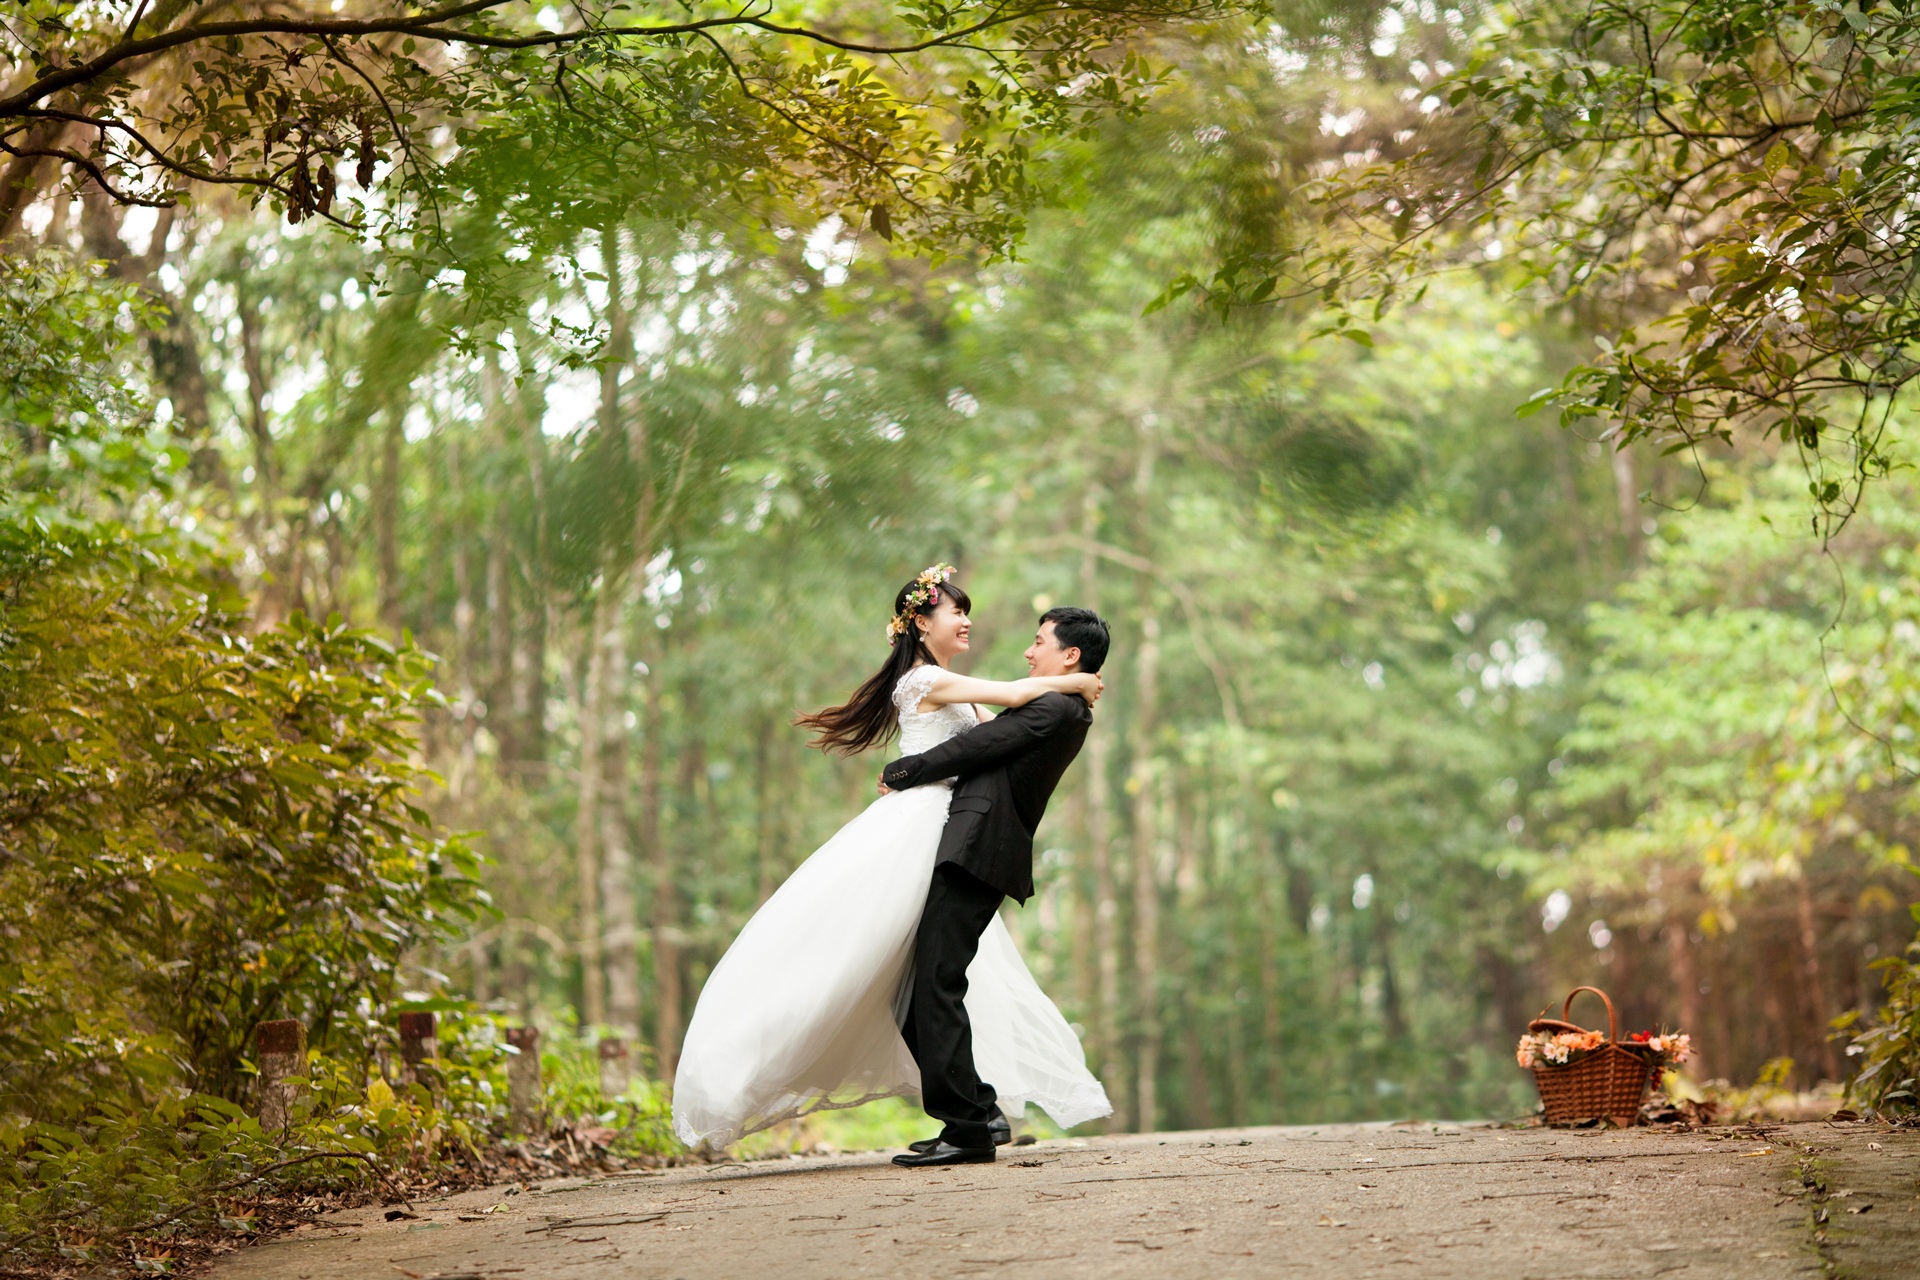  Pre  wedding  Photoshoot Ideas Indoor  and Outdoor 